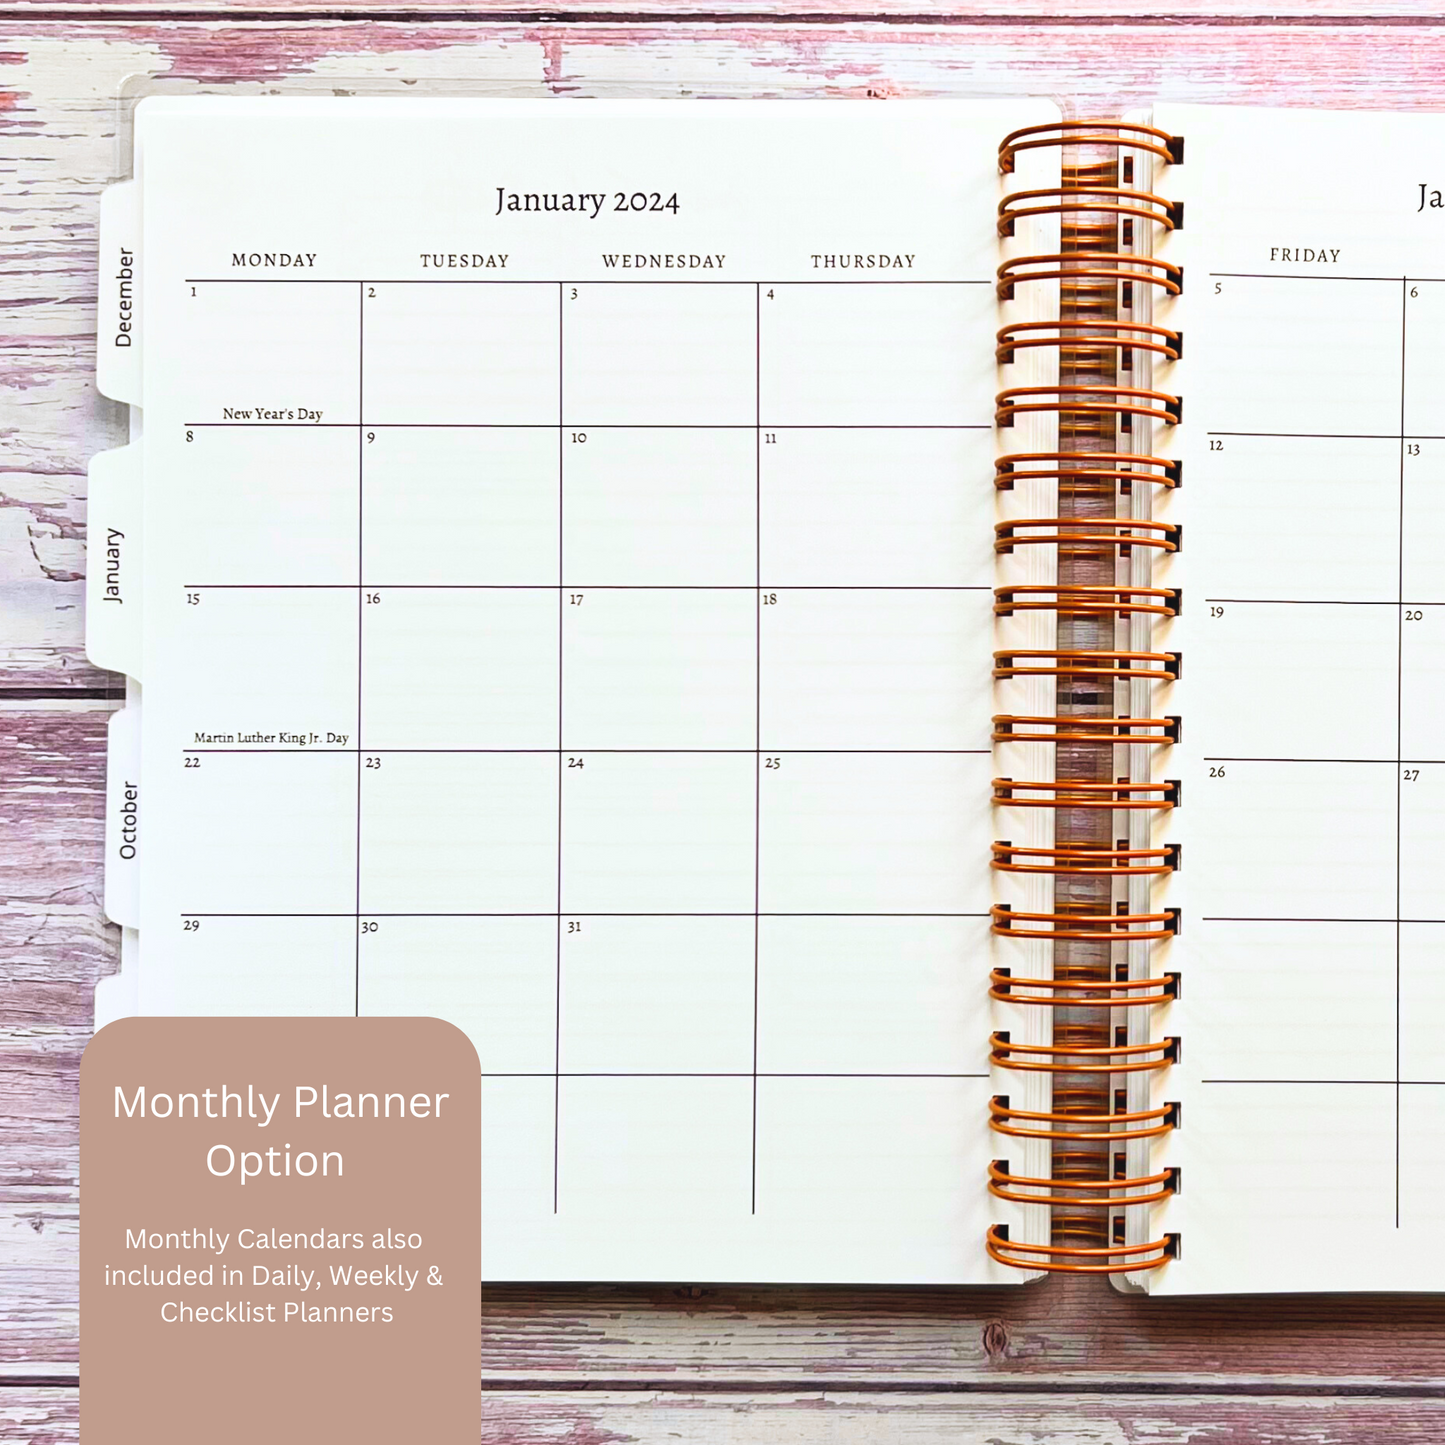 Personalized Monthly Planner - Flower Garden